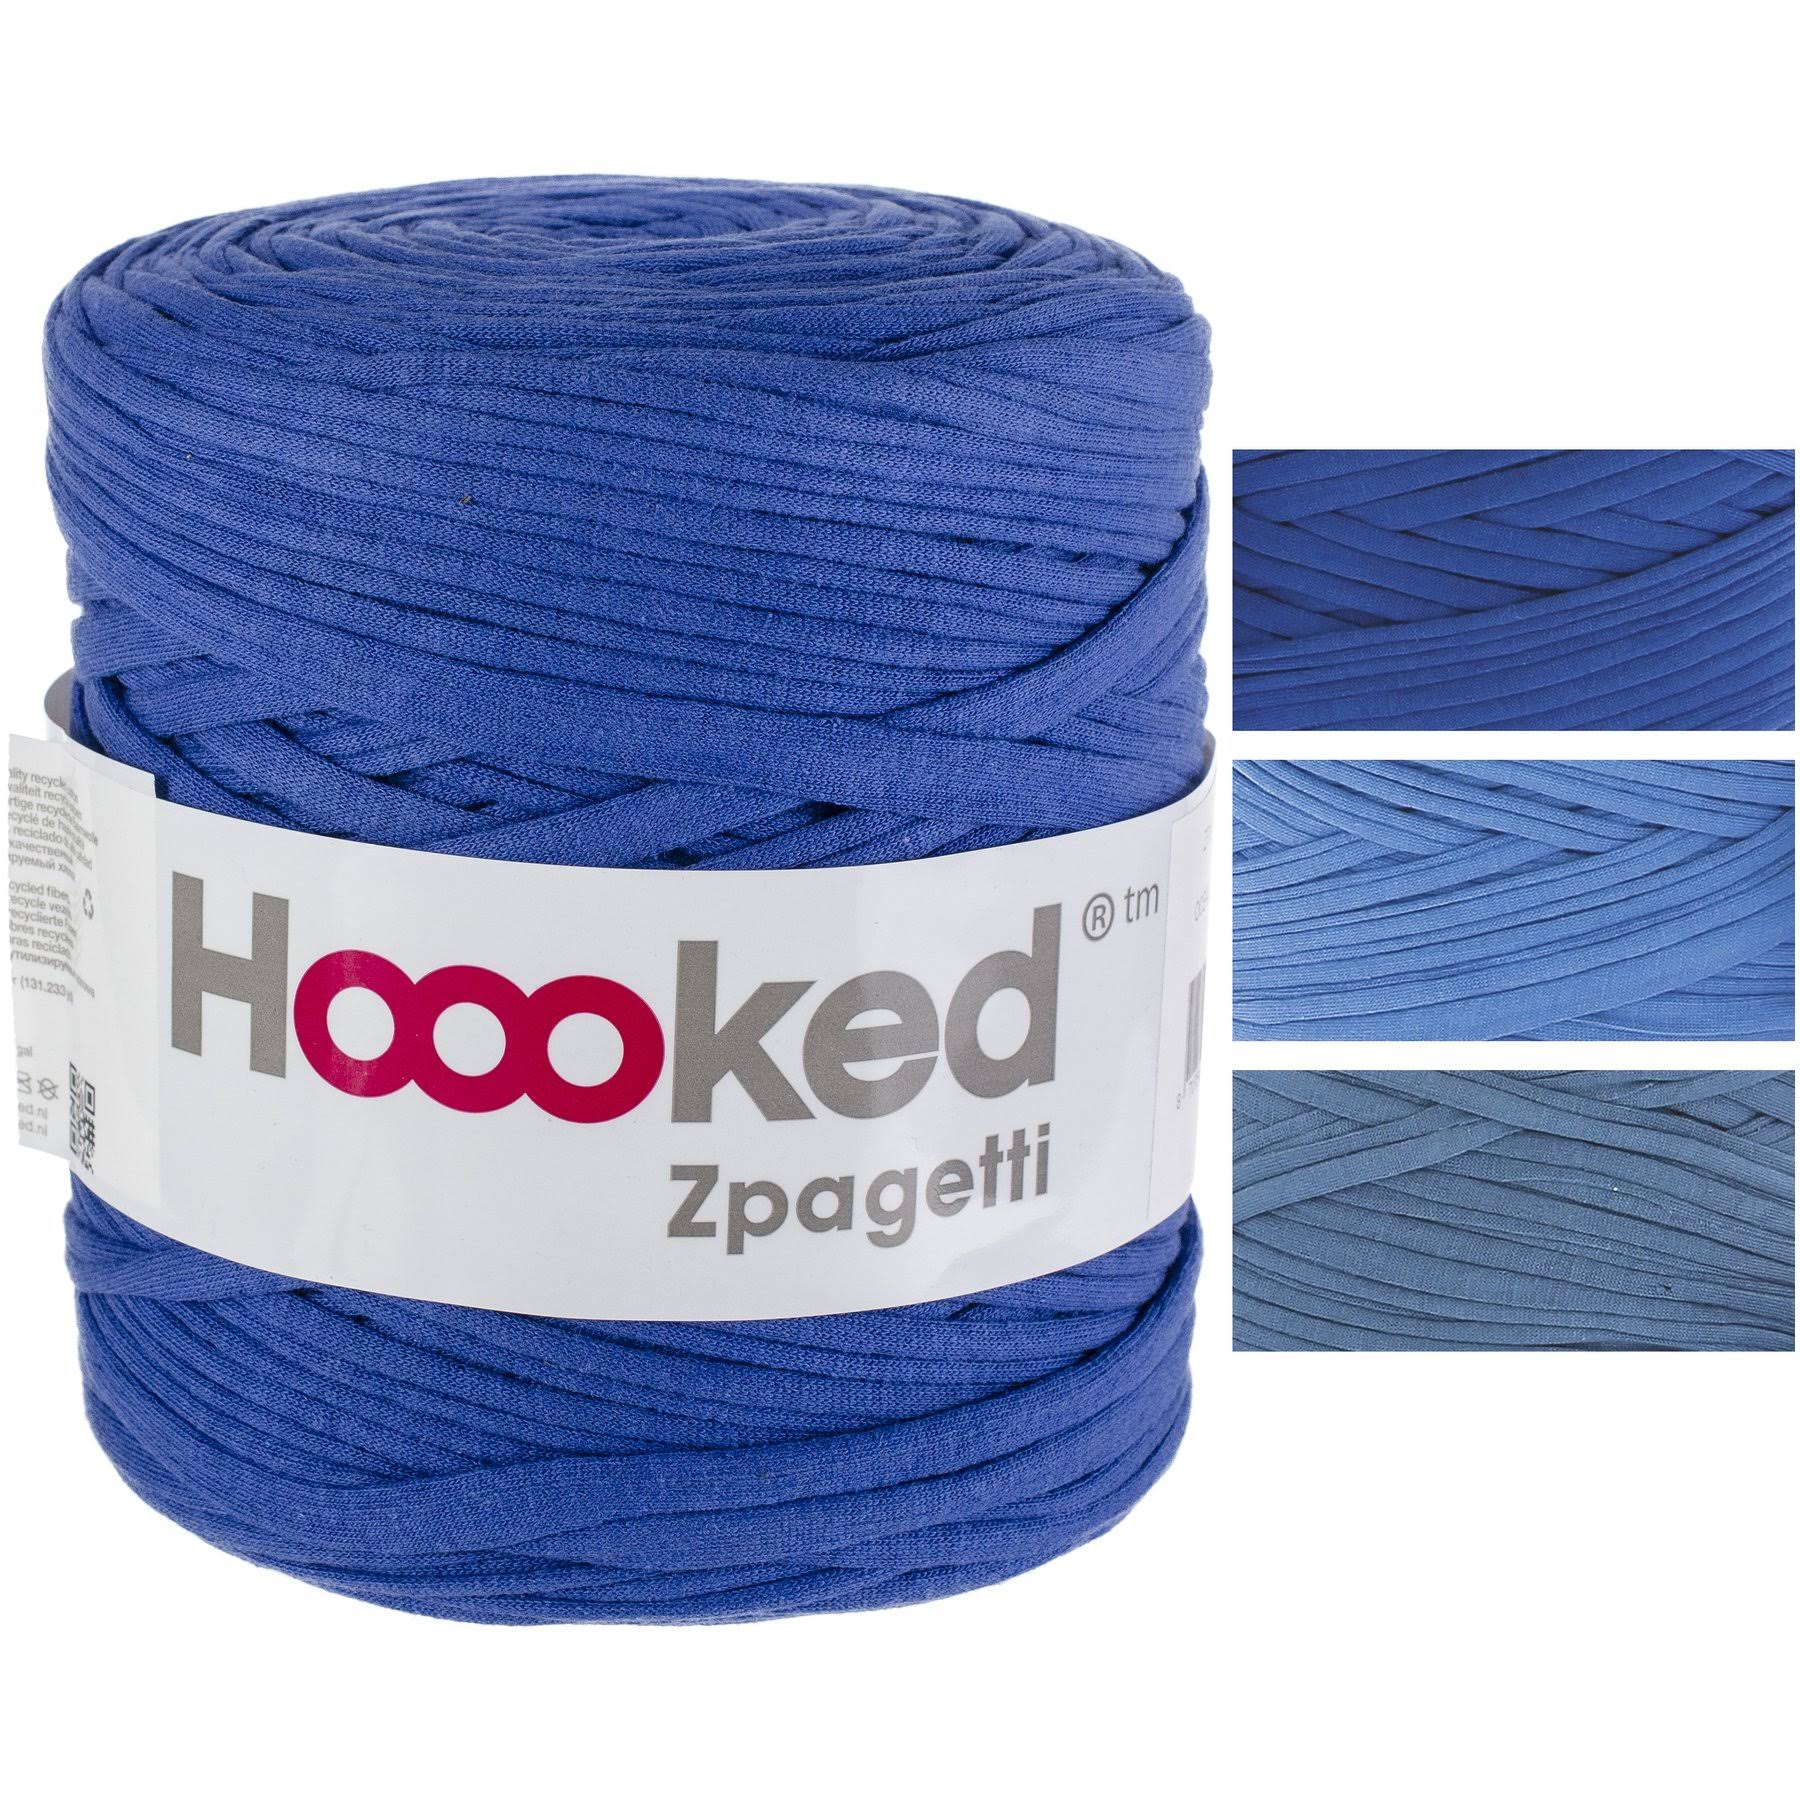 Hoooked Zpagetti Yarn-Ocean Blue - Mid Blue Shades